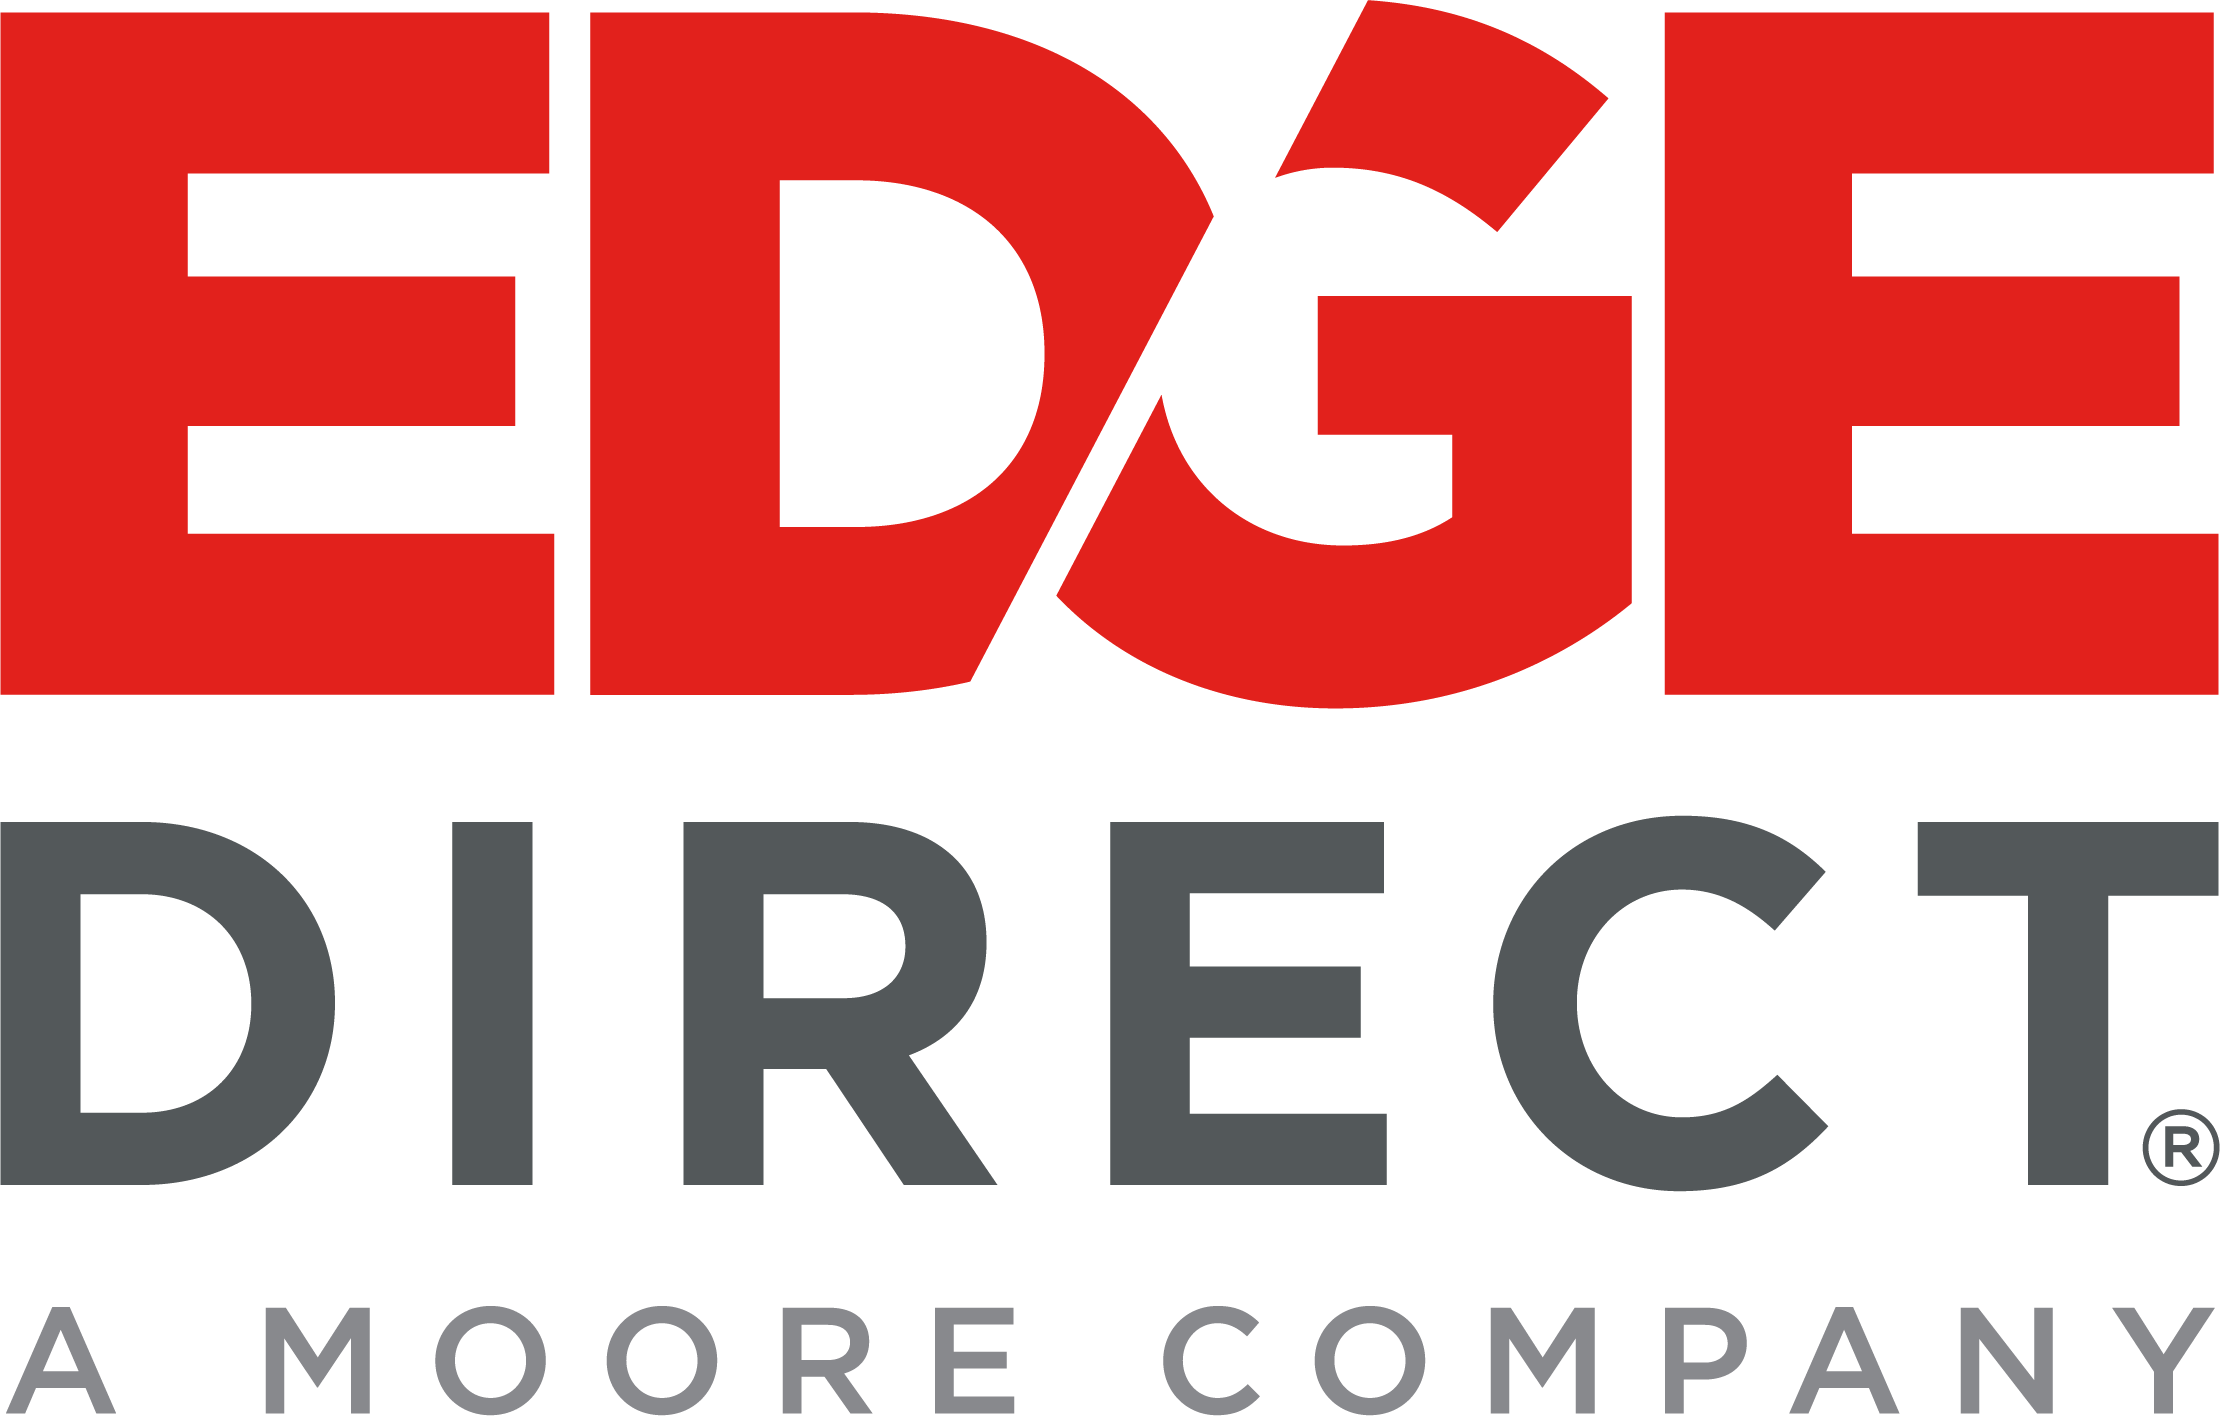 Edge Direct